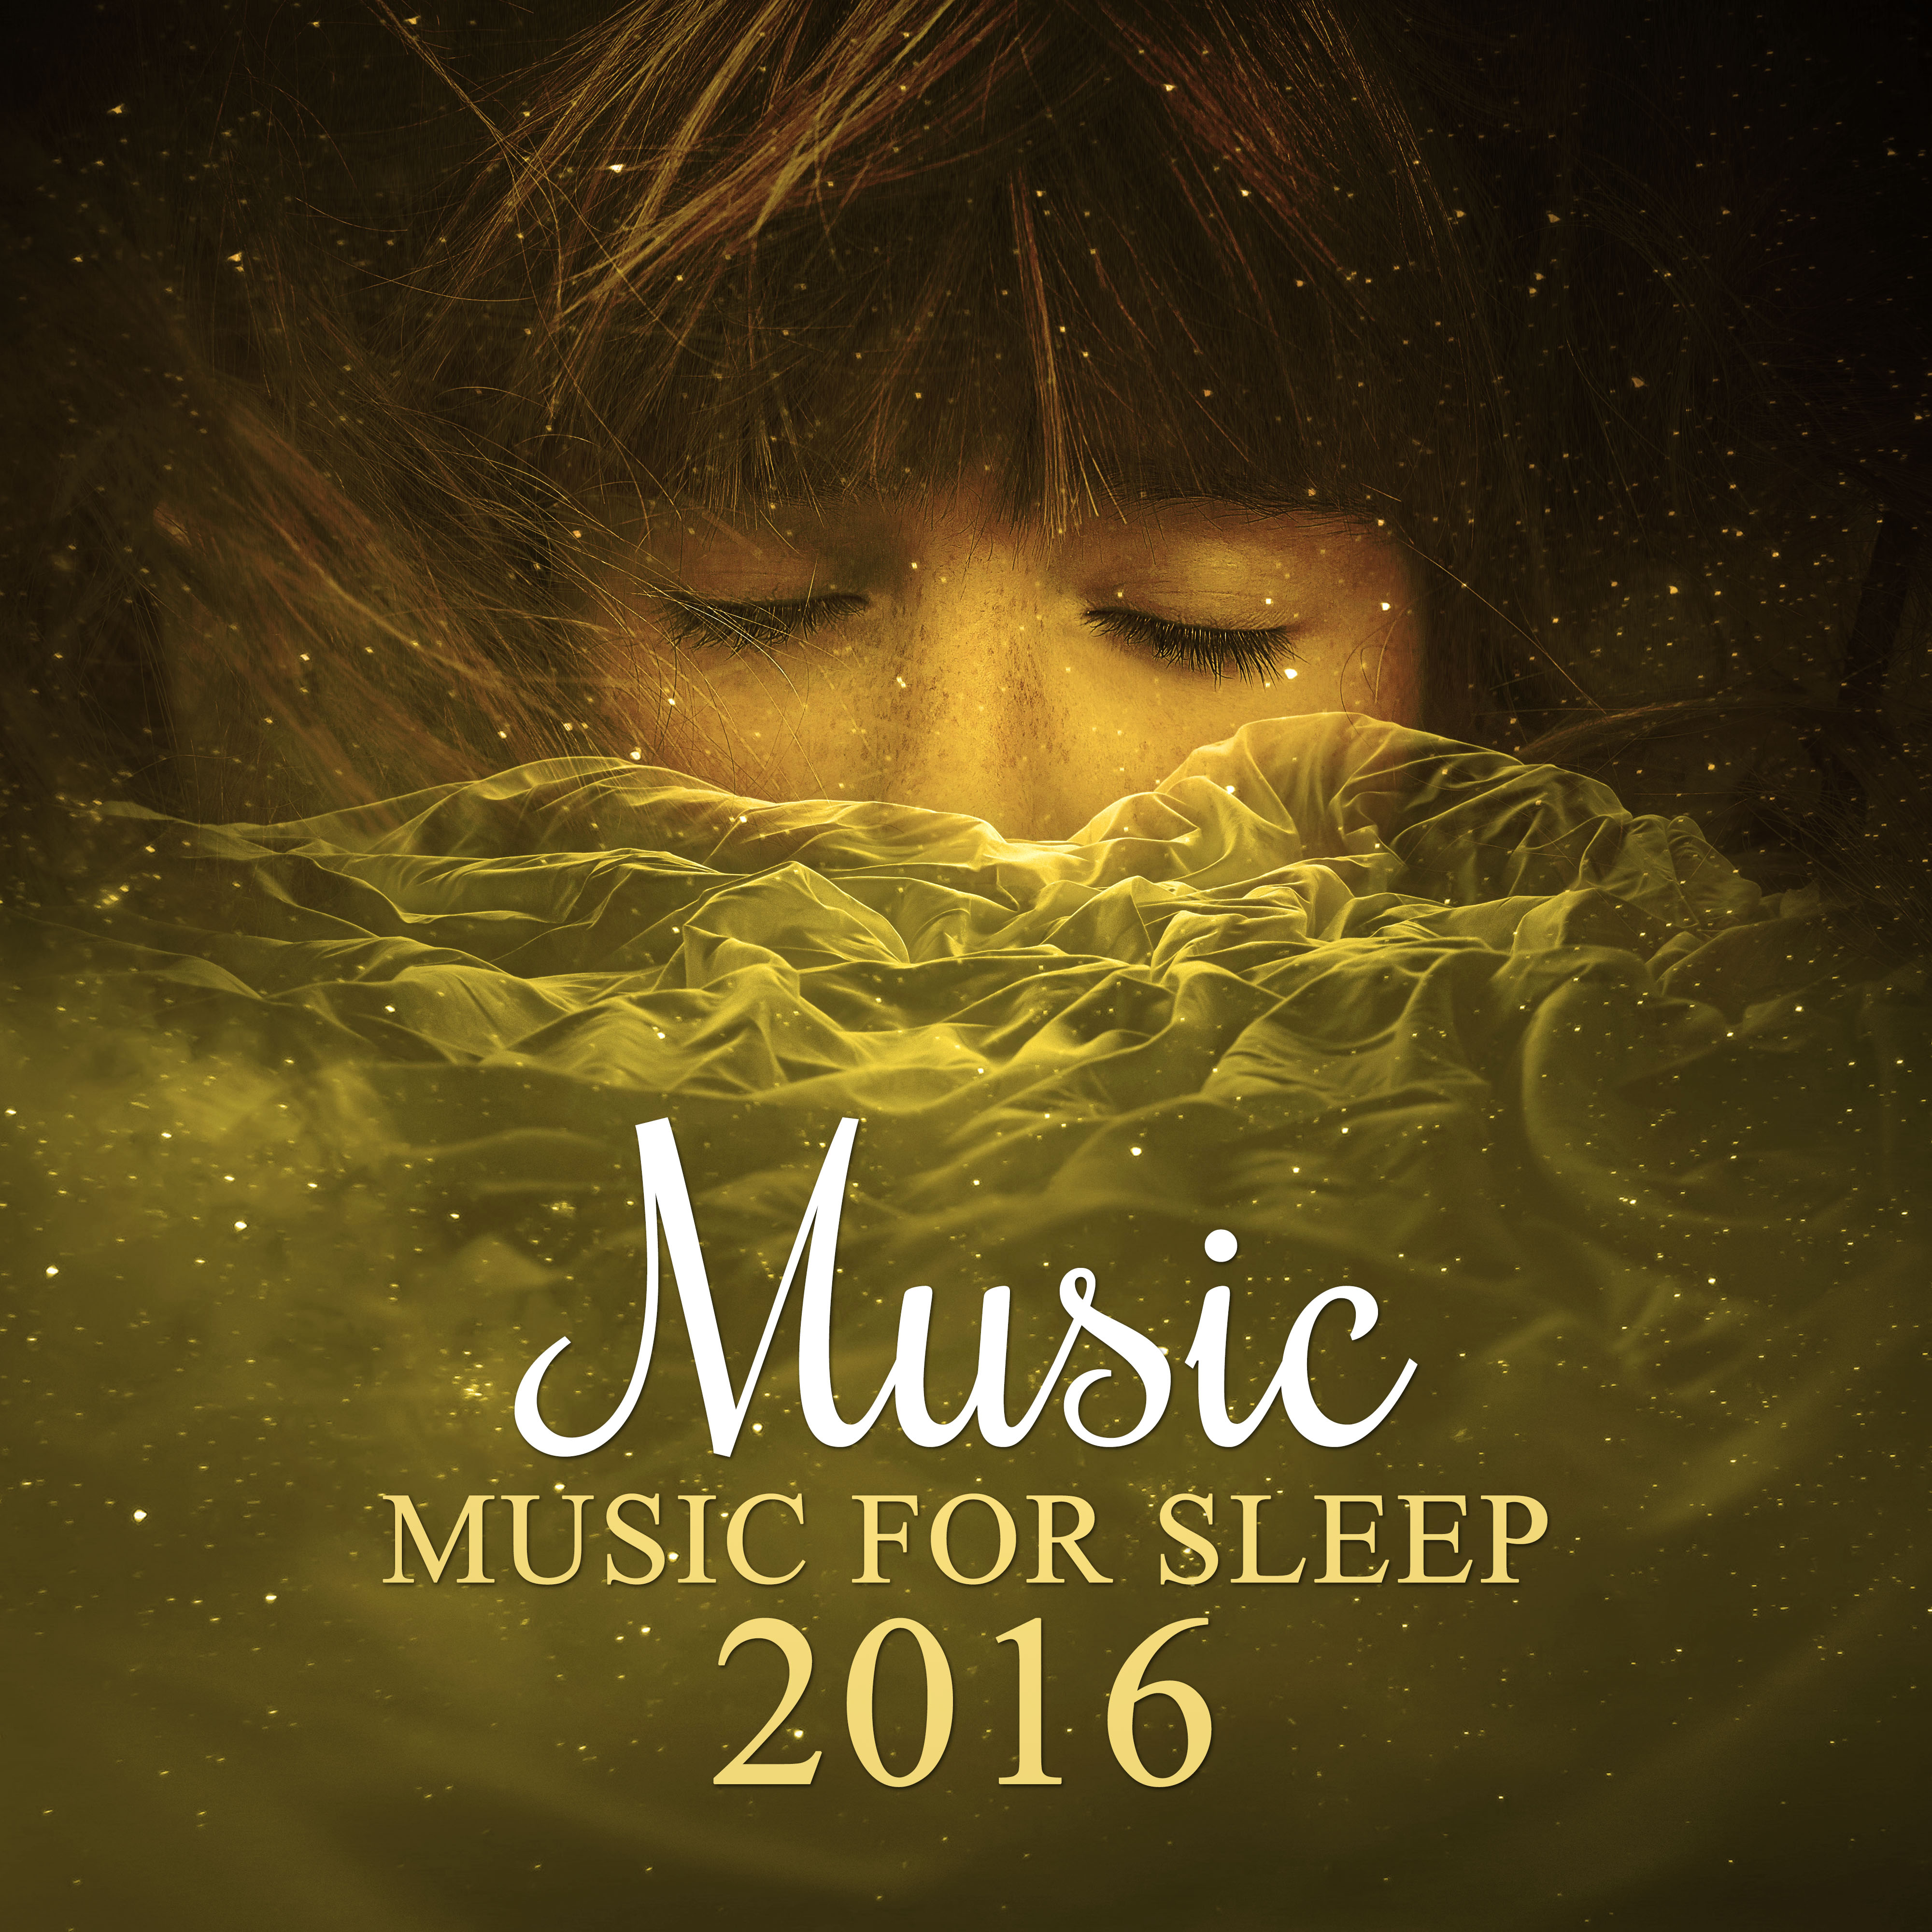 Music for Sleep 2016 – Calm Sounds of Nature to Help You Fall Asleep & Rest, Beautiful Peaceful Music, Sleepy Sleep, Relaxing Music